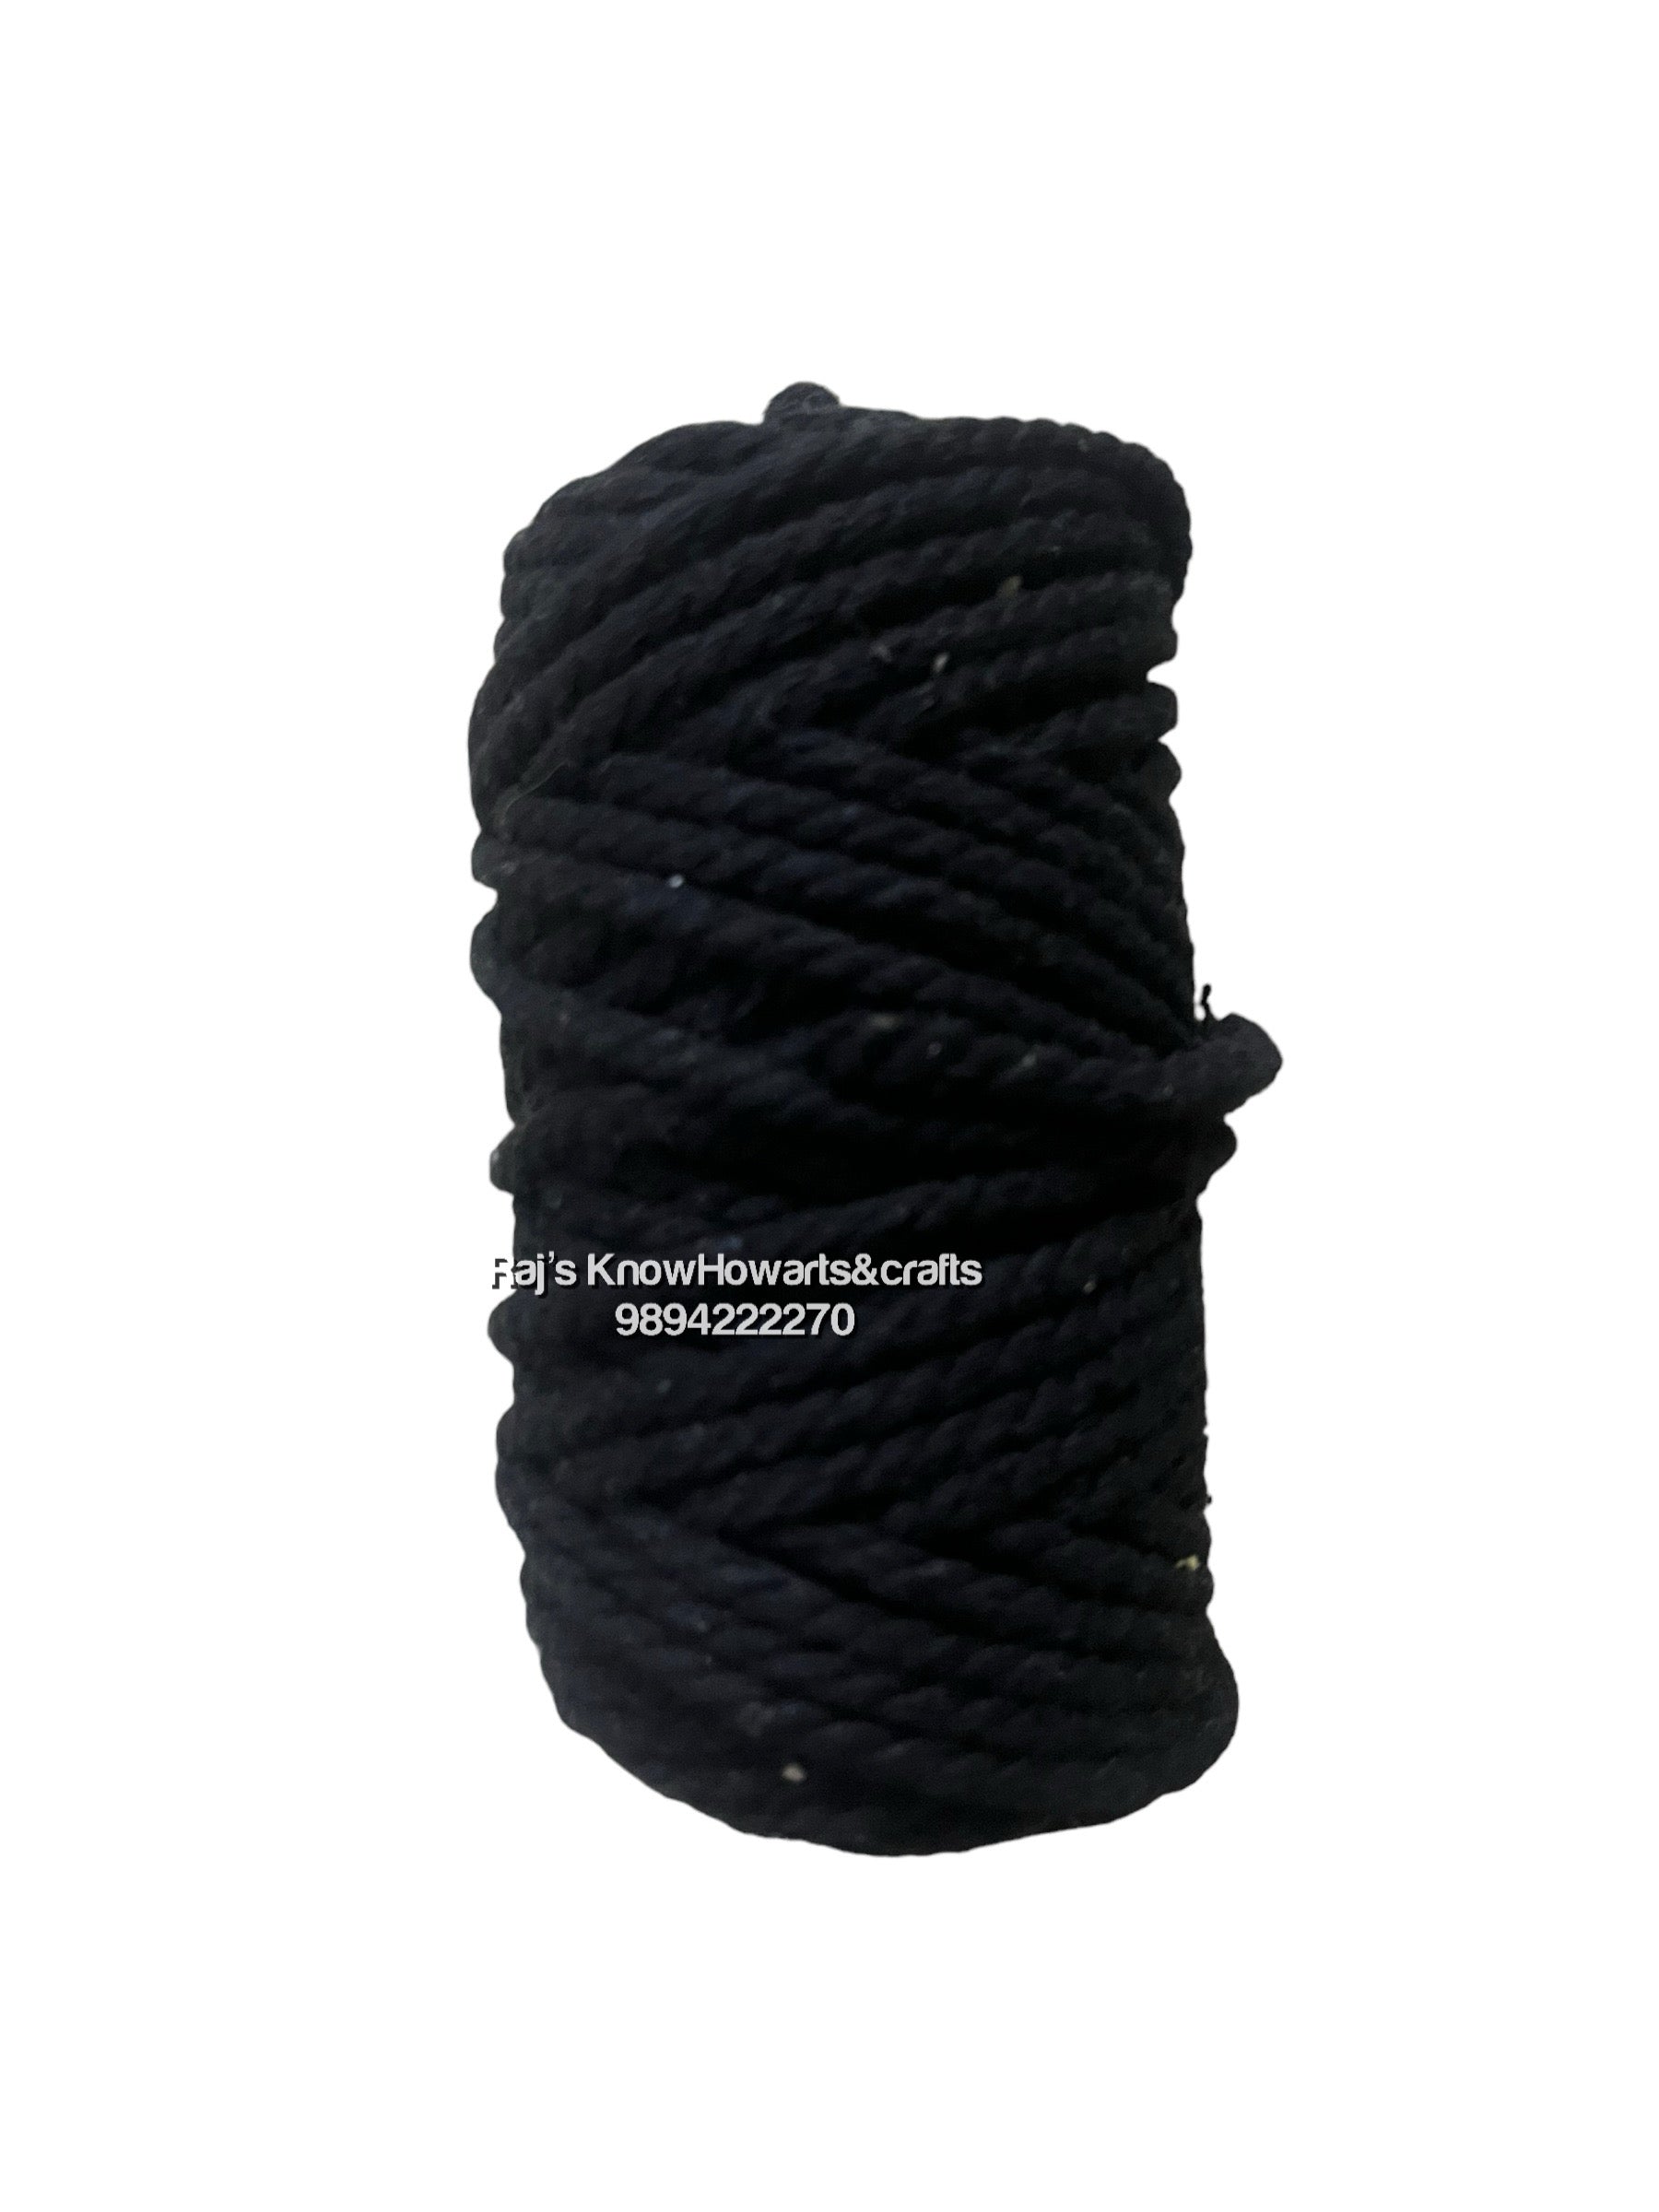 4mm cotton Chrochet thread